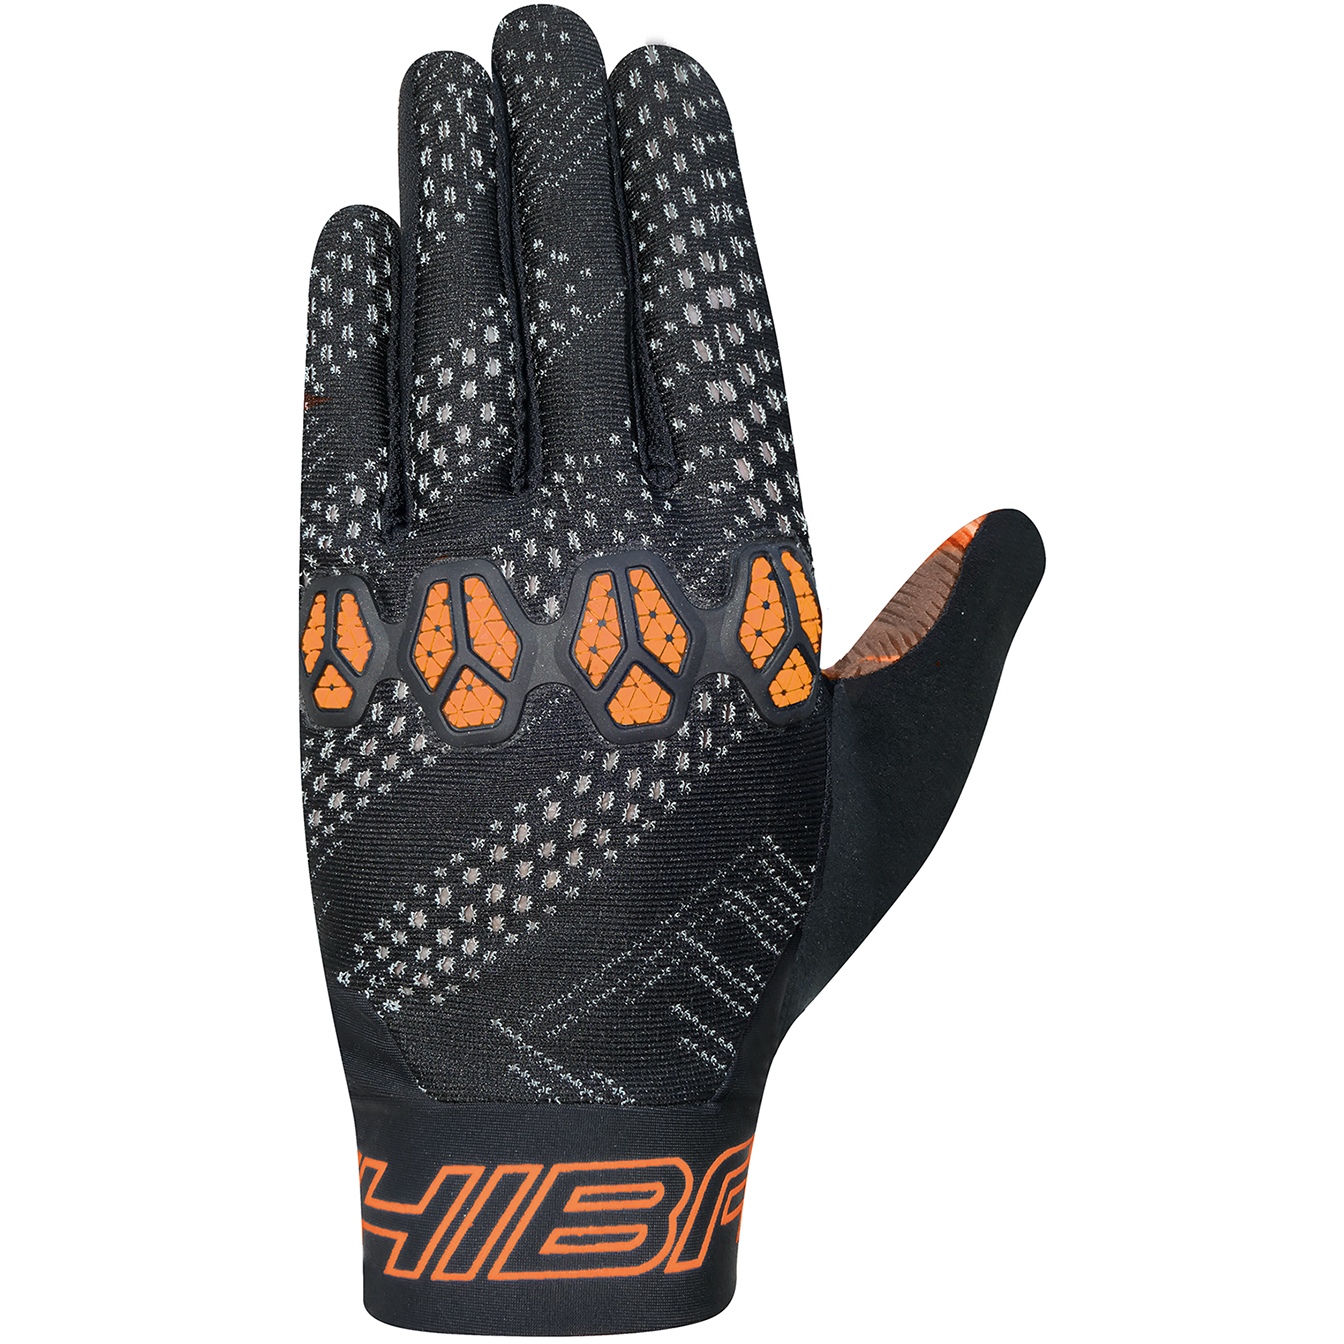 Image of Chiba Trinity Youth Cycling Gloves - black/orange